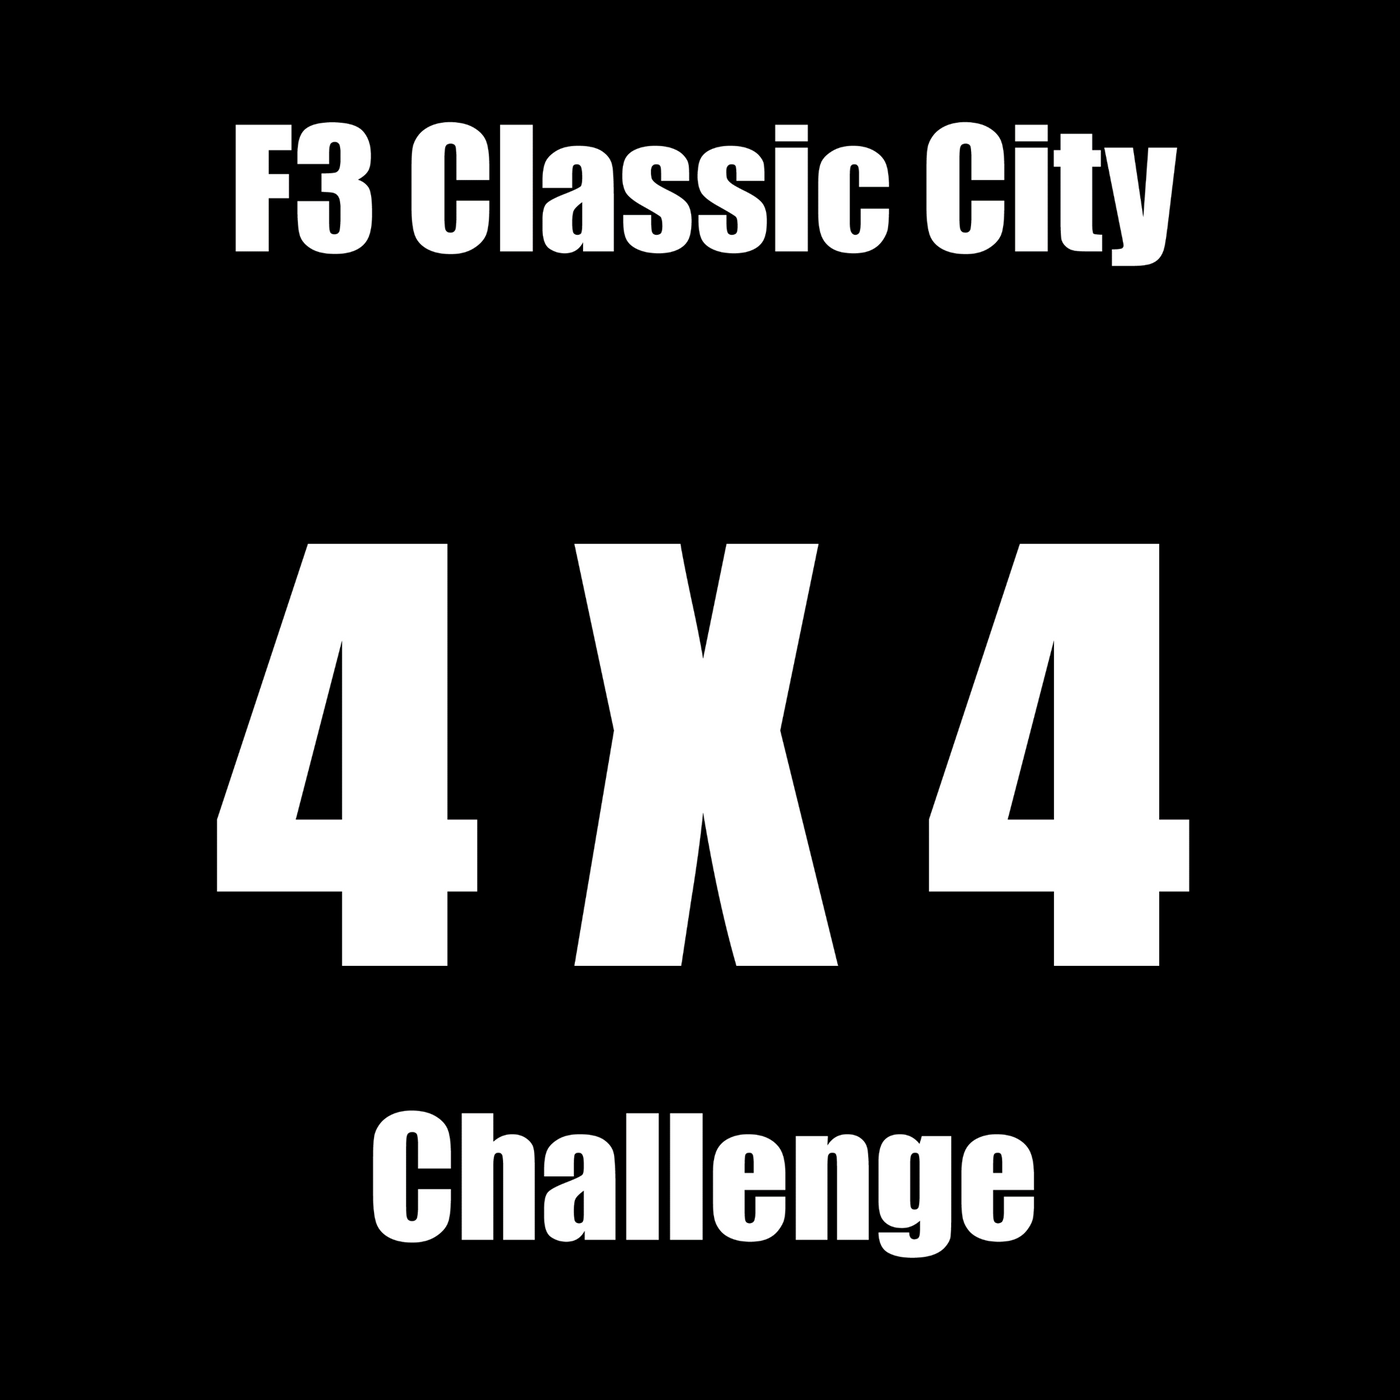 F3 Classic City 4x4 Challenge Pre-Order April 2022